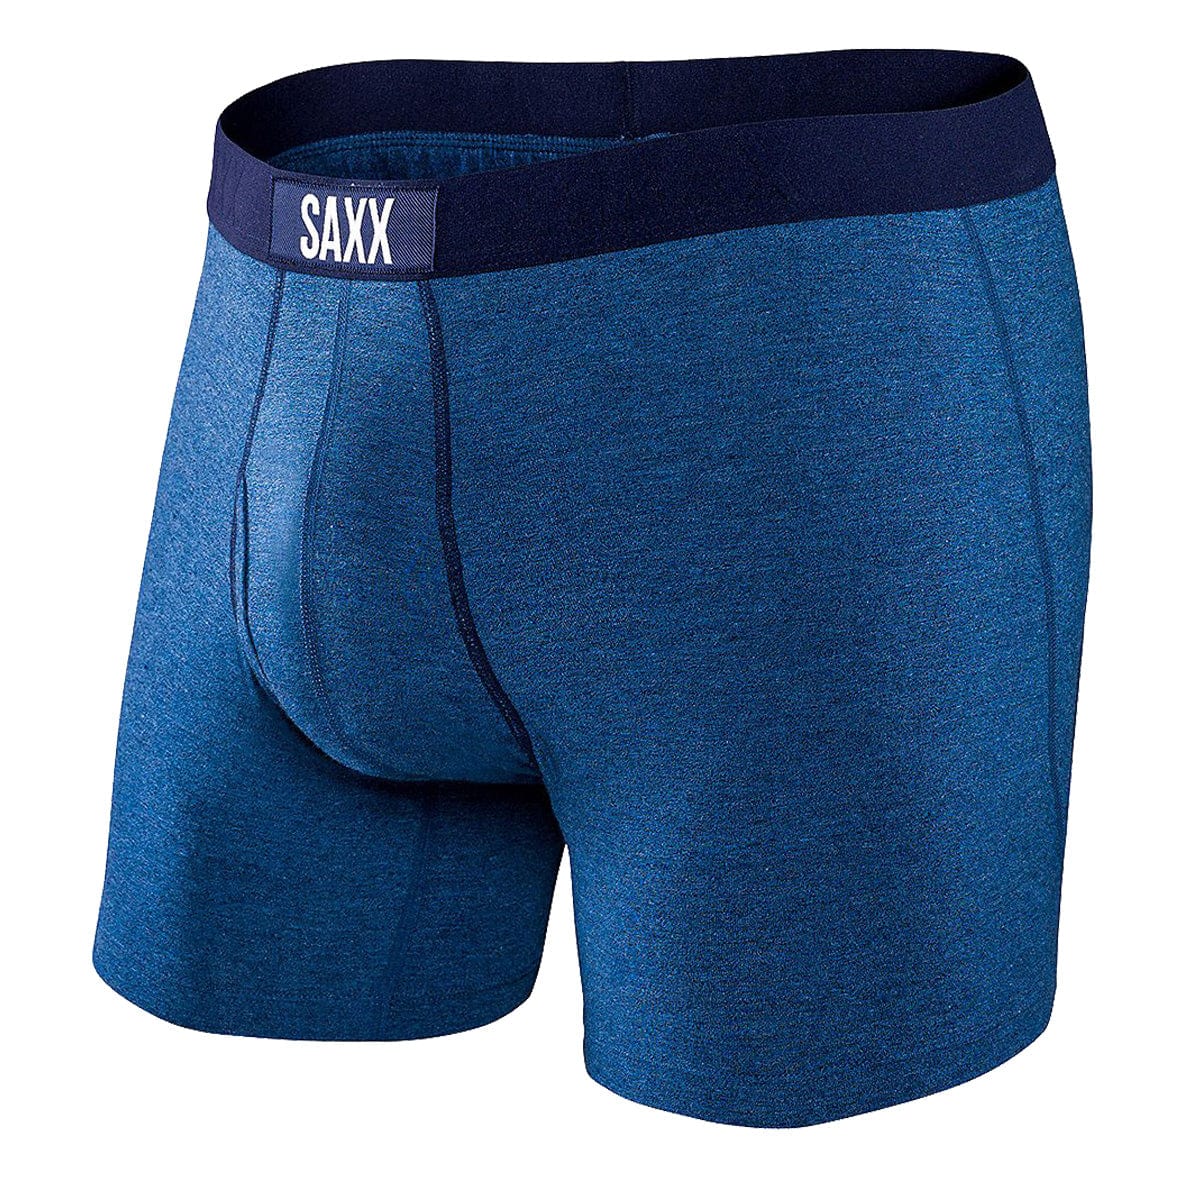 Saxx Ultra Boxers - Indigo - The Hockey Shop Source For Sports